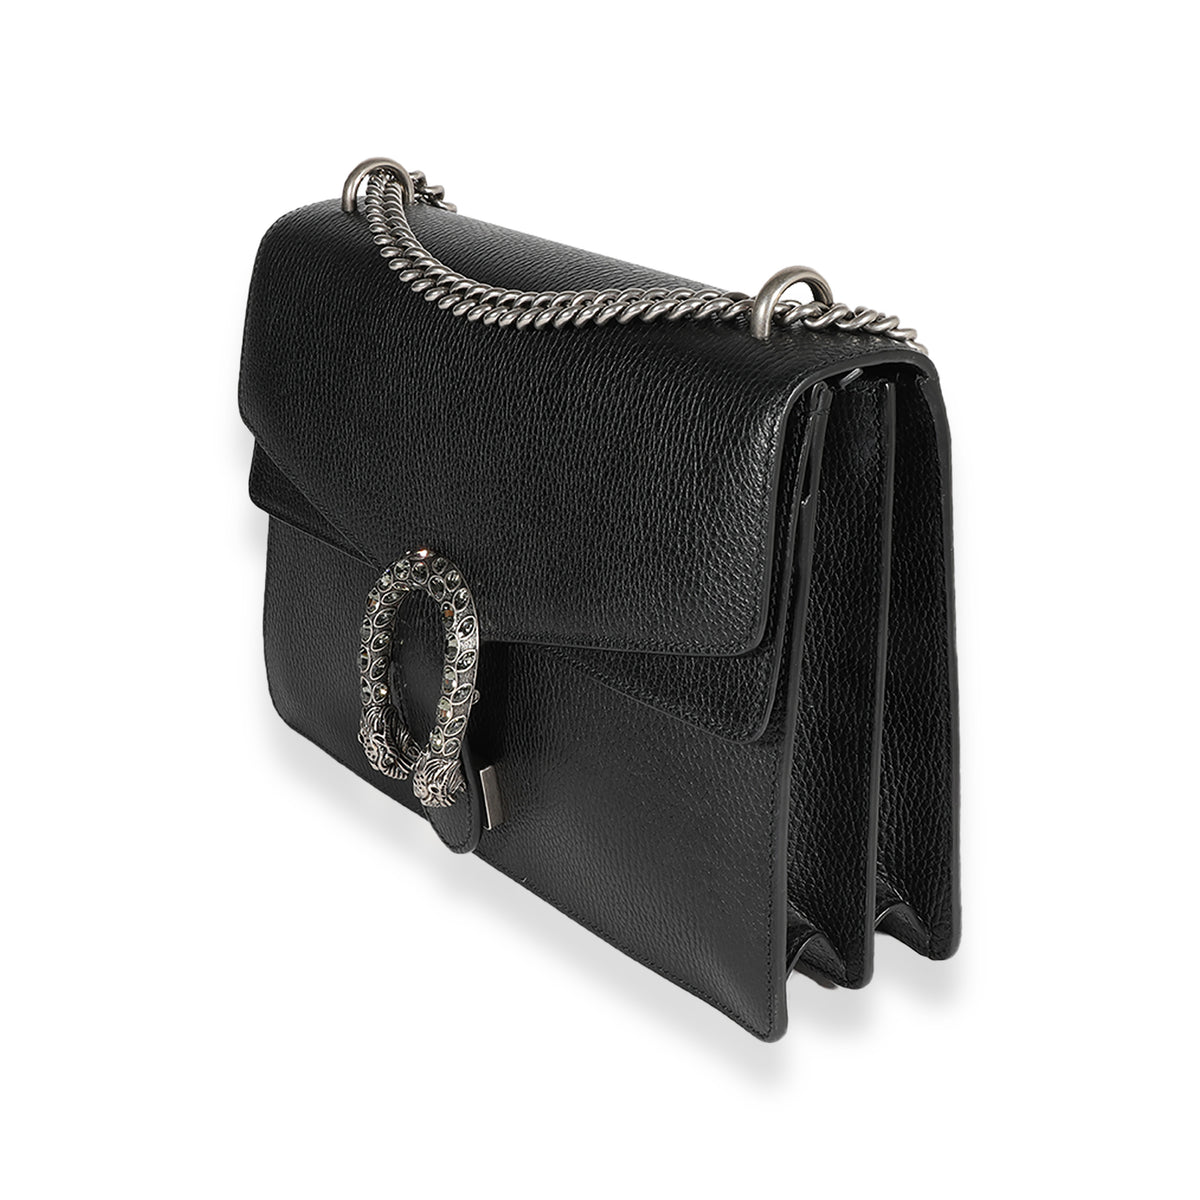 Gucci Dionysus Shoulder Bag in Black Grained Leather